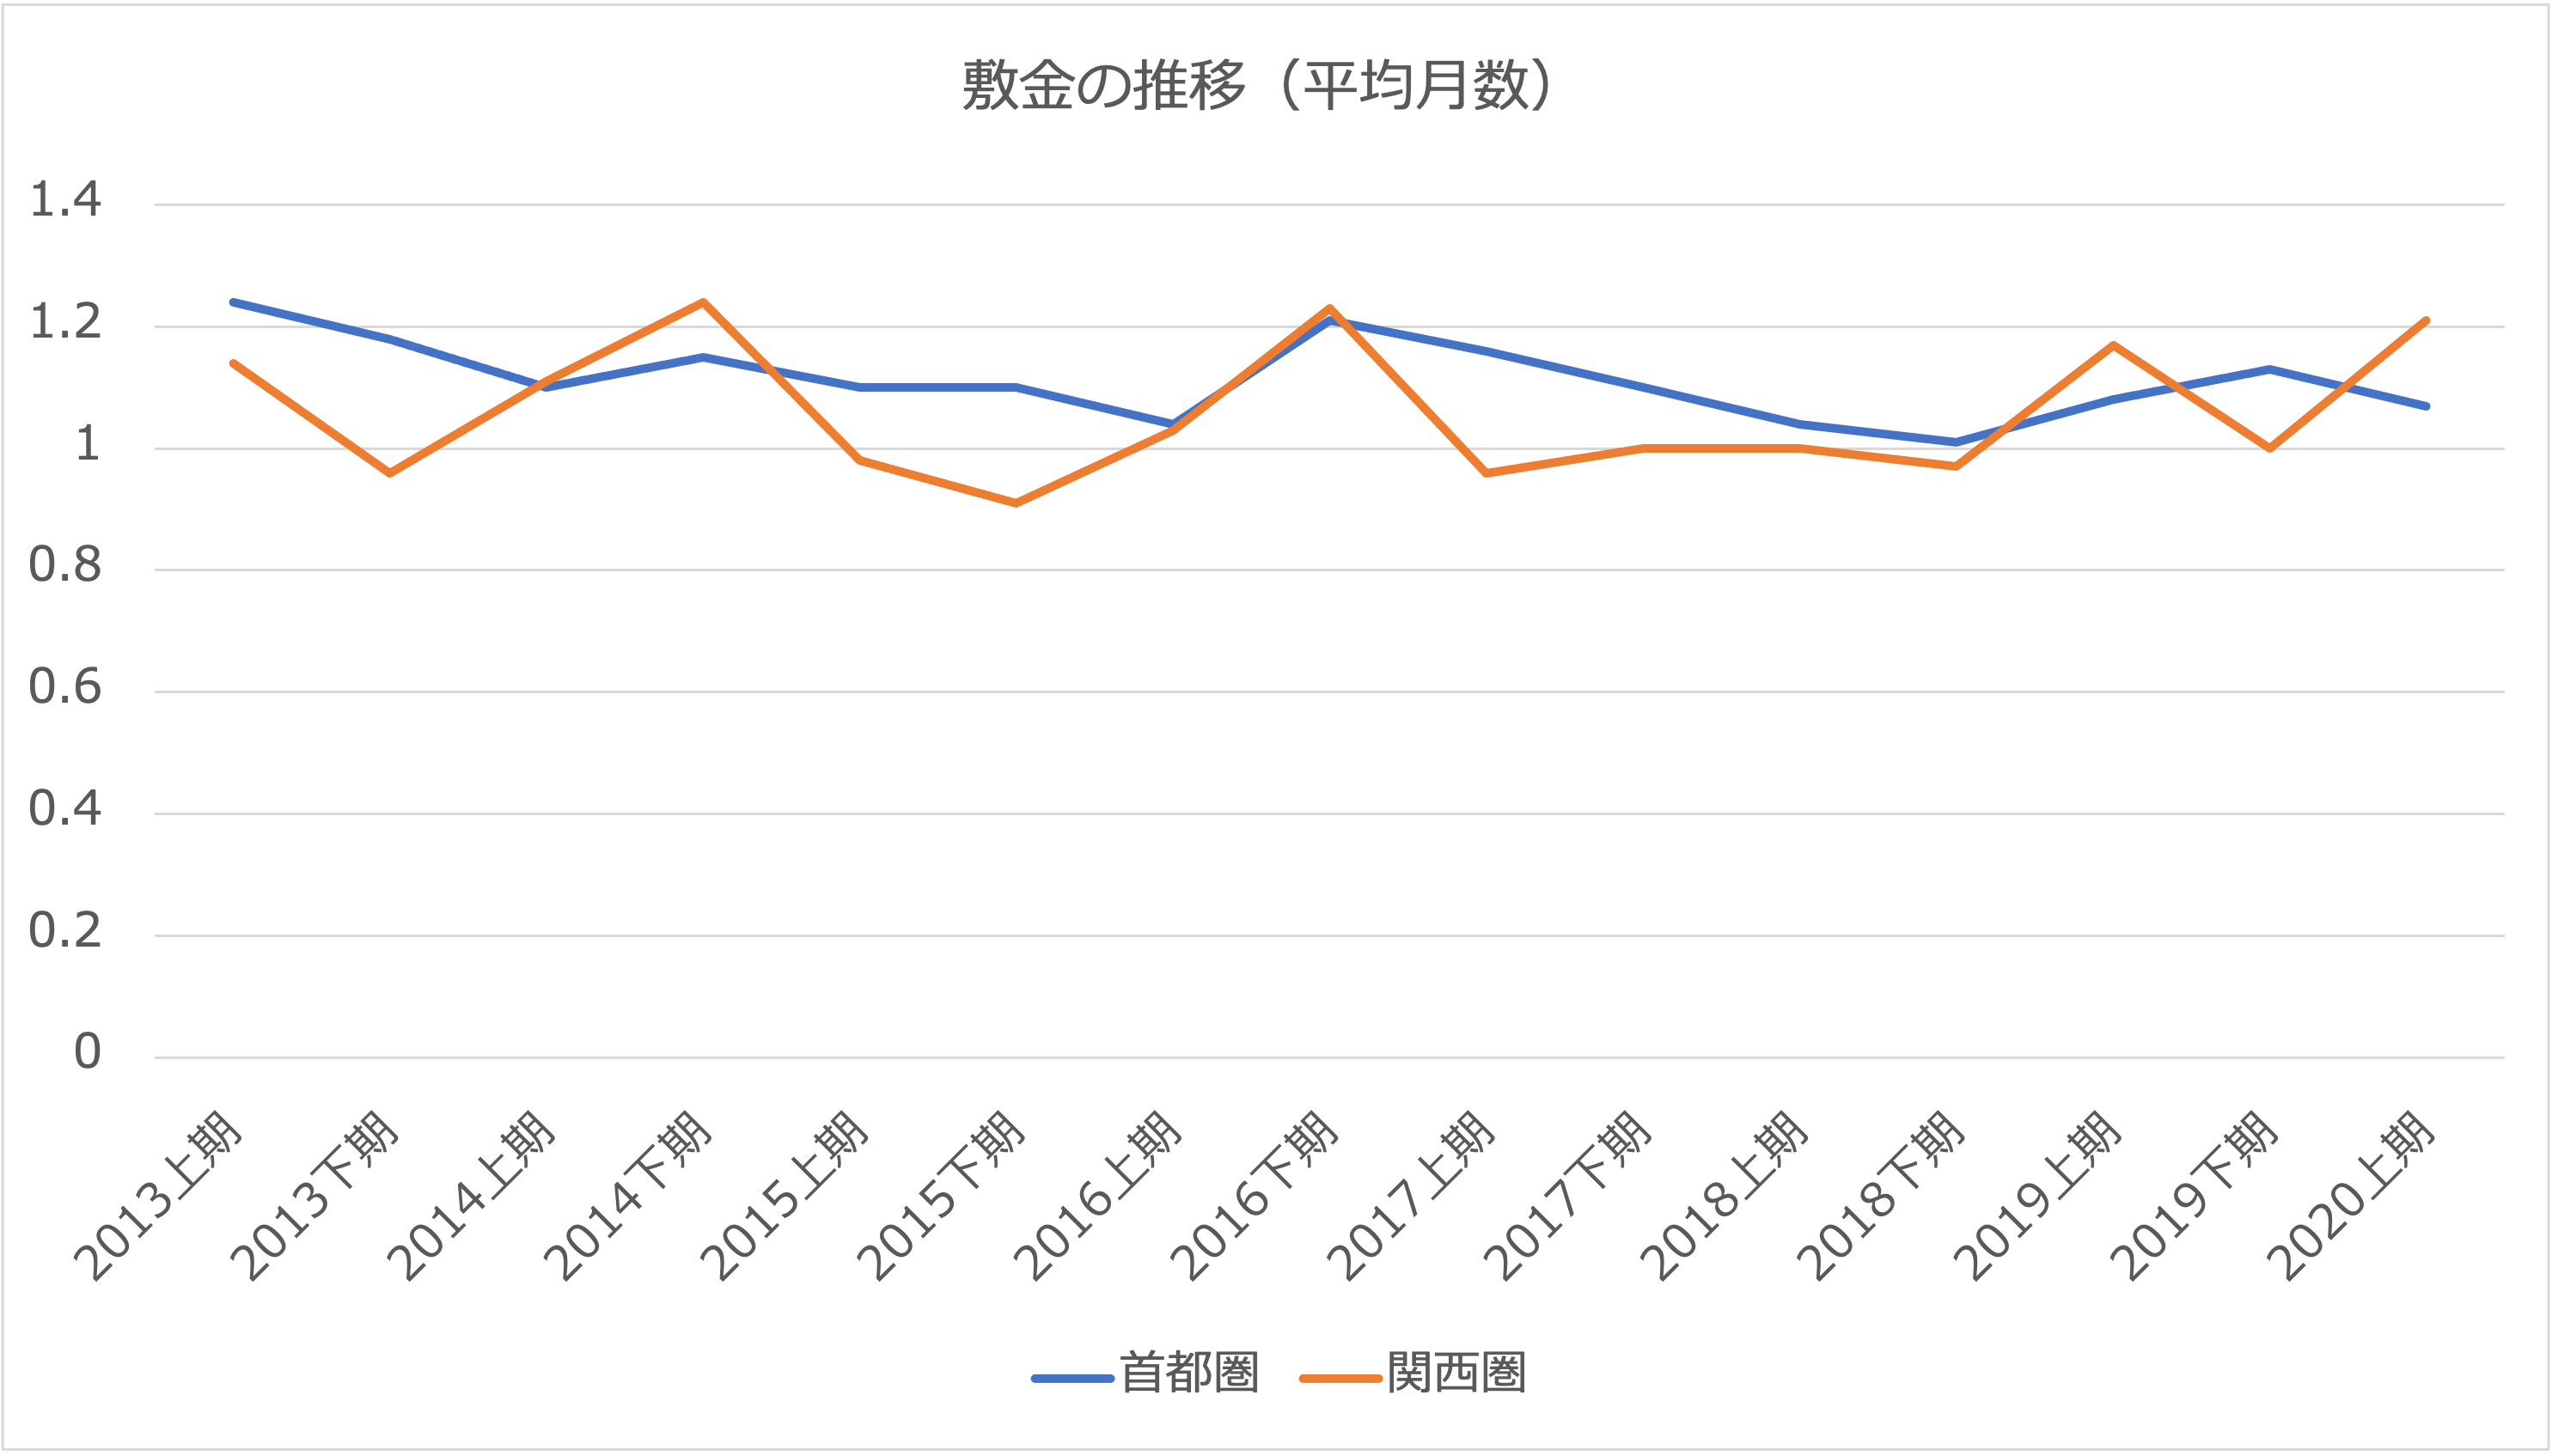 敷金の推移（平均月数）